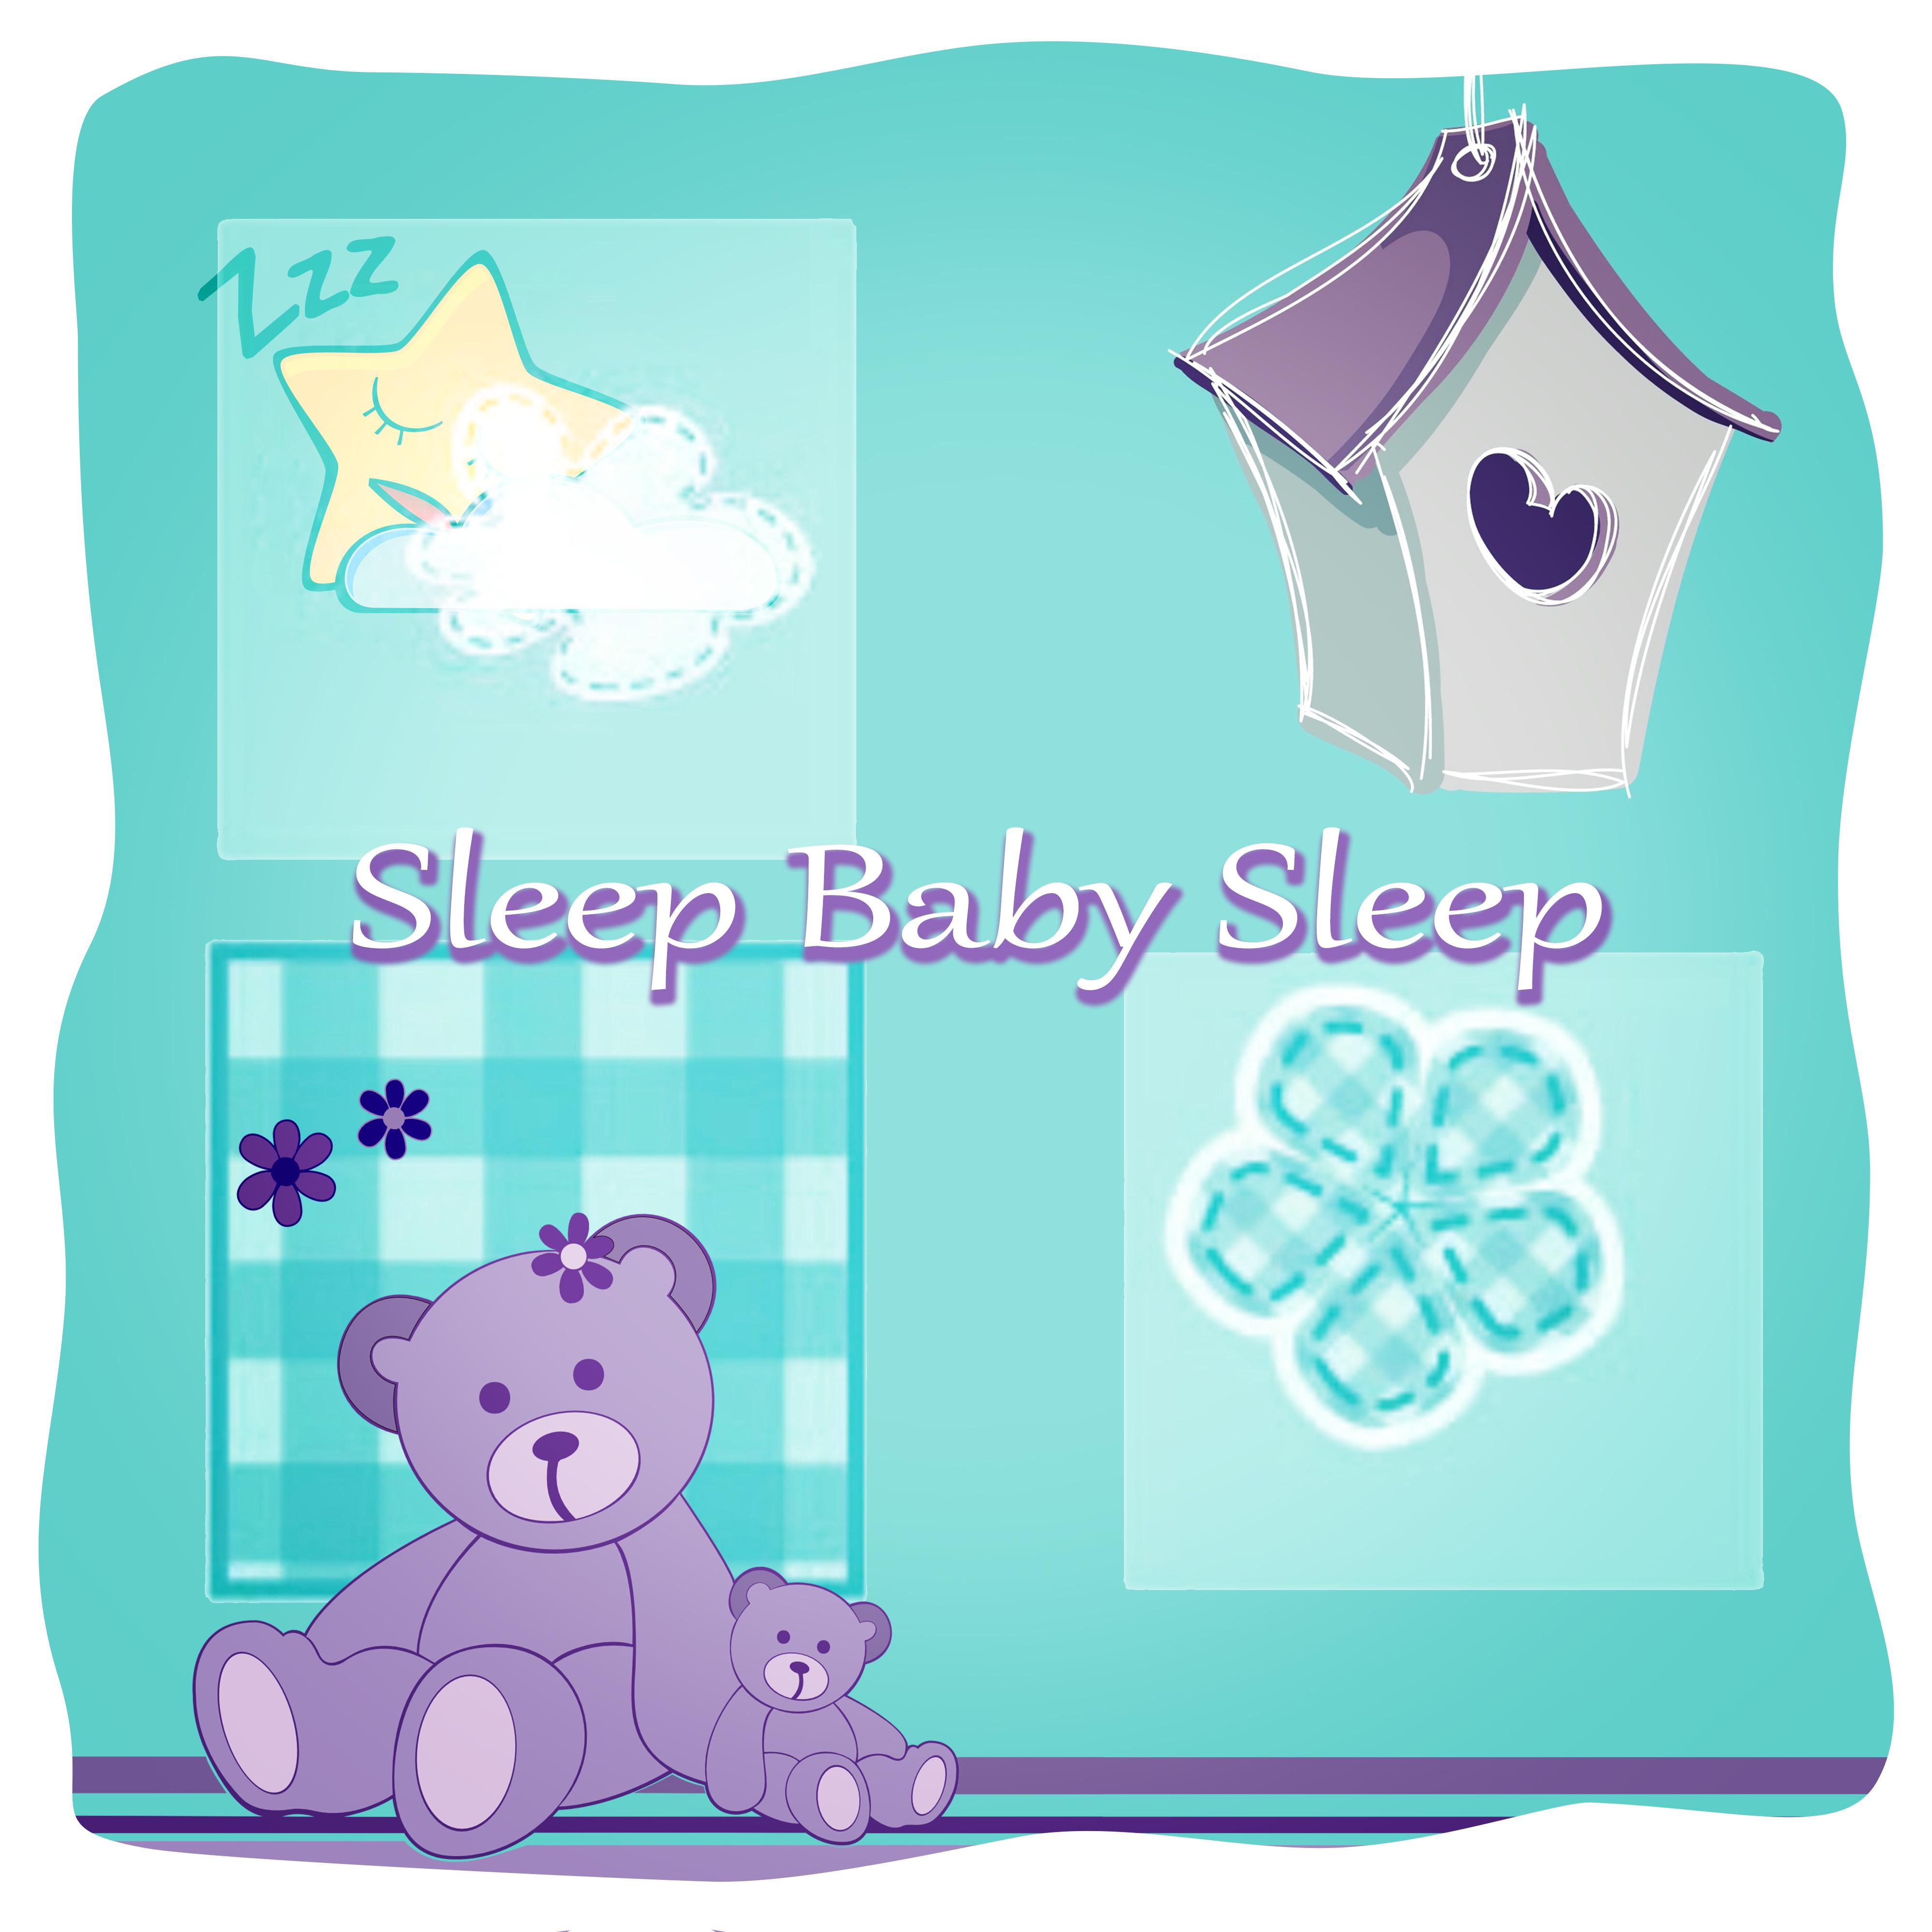 Sleep Baby Sleep – Harp Music for Deep Sleep, Lullabies with Relaxing Piano, Sleep Through the Night, Calm Music to Fall Asleep, Natural Sleep Aid Sleep Tight